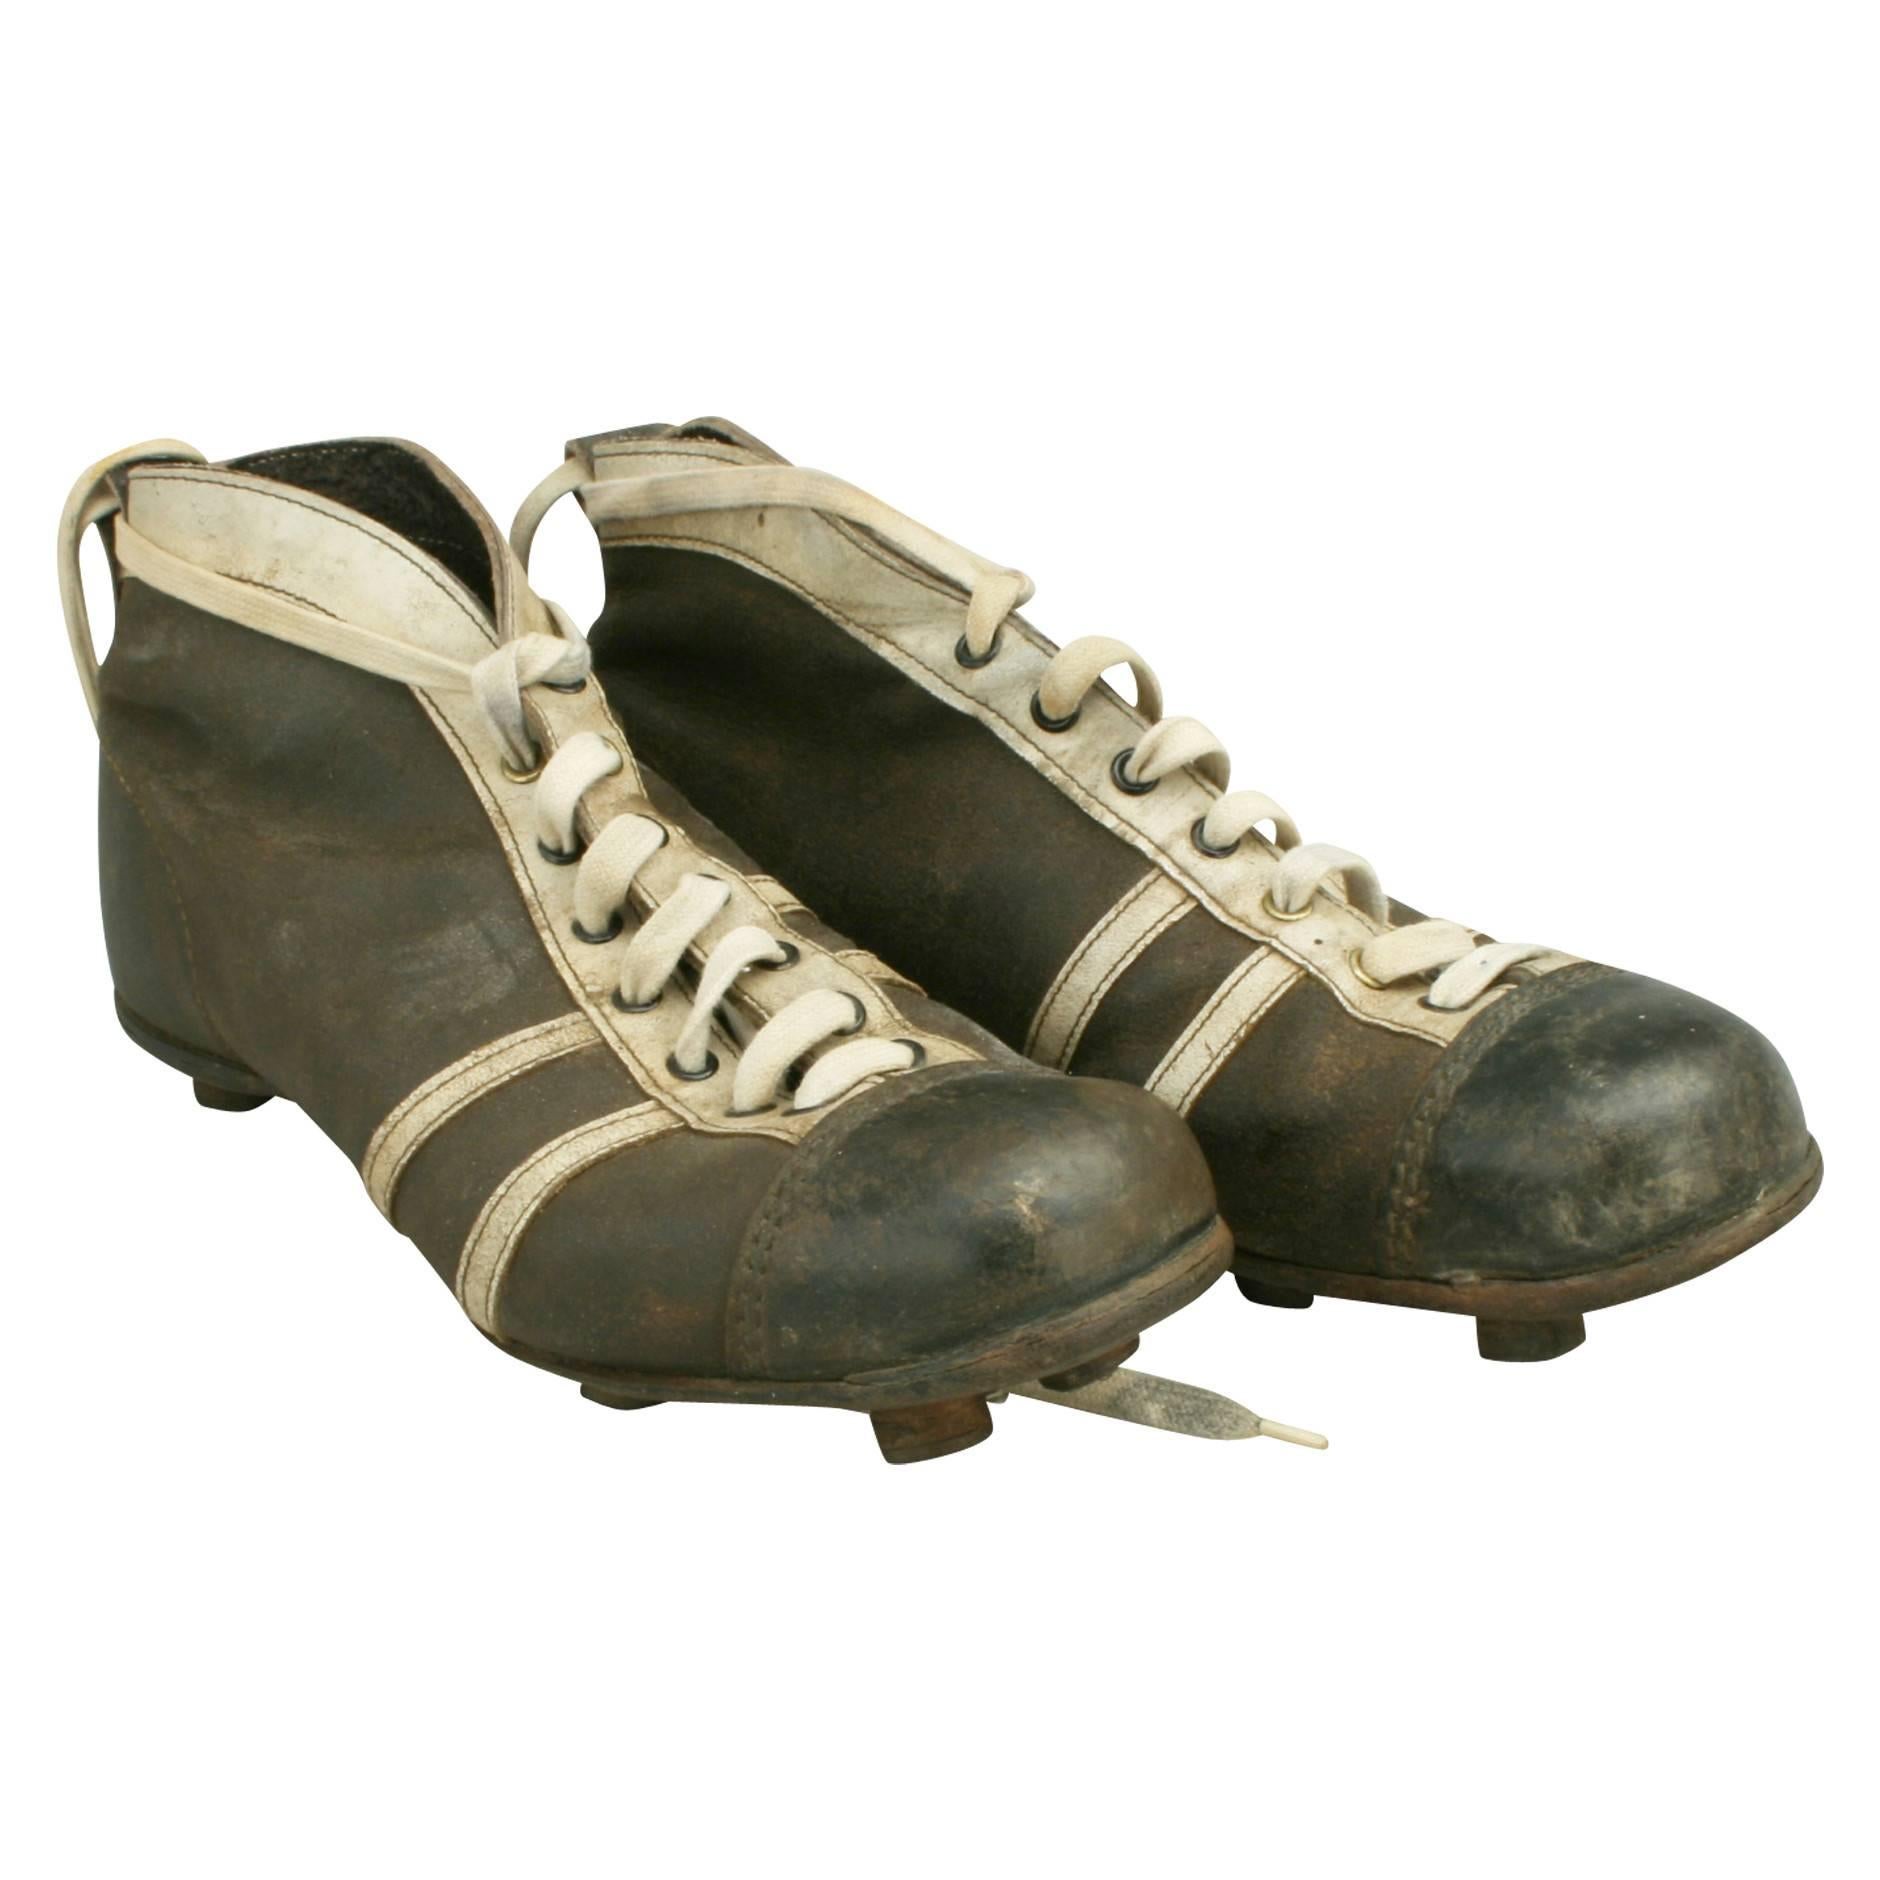 Vintage Leather Football Boots